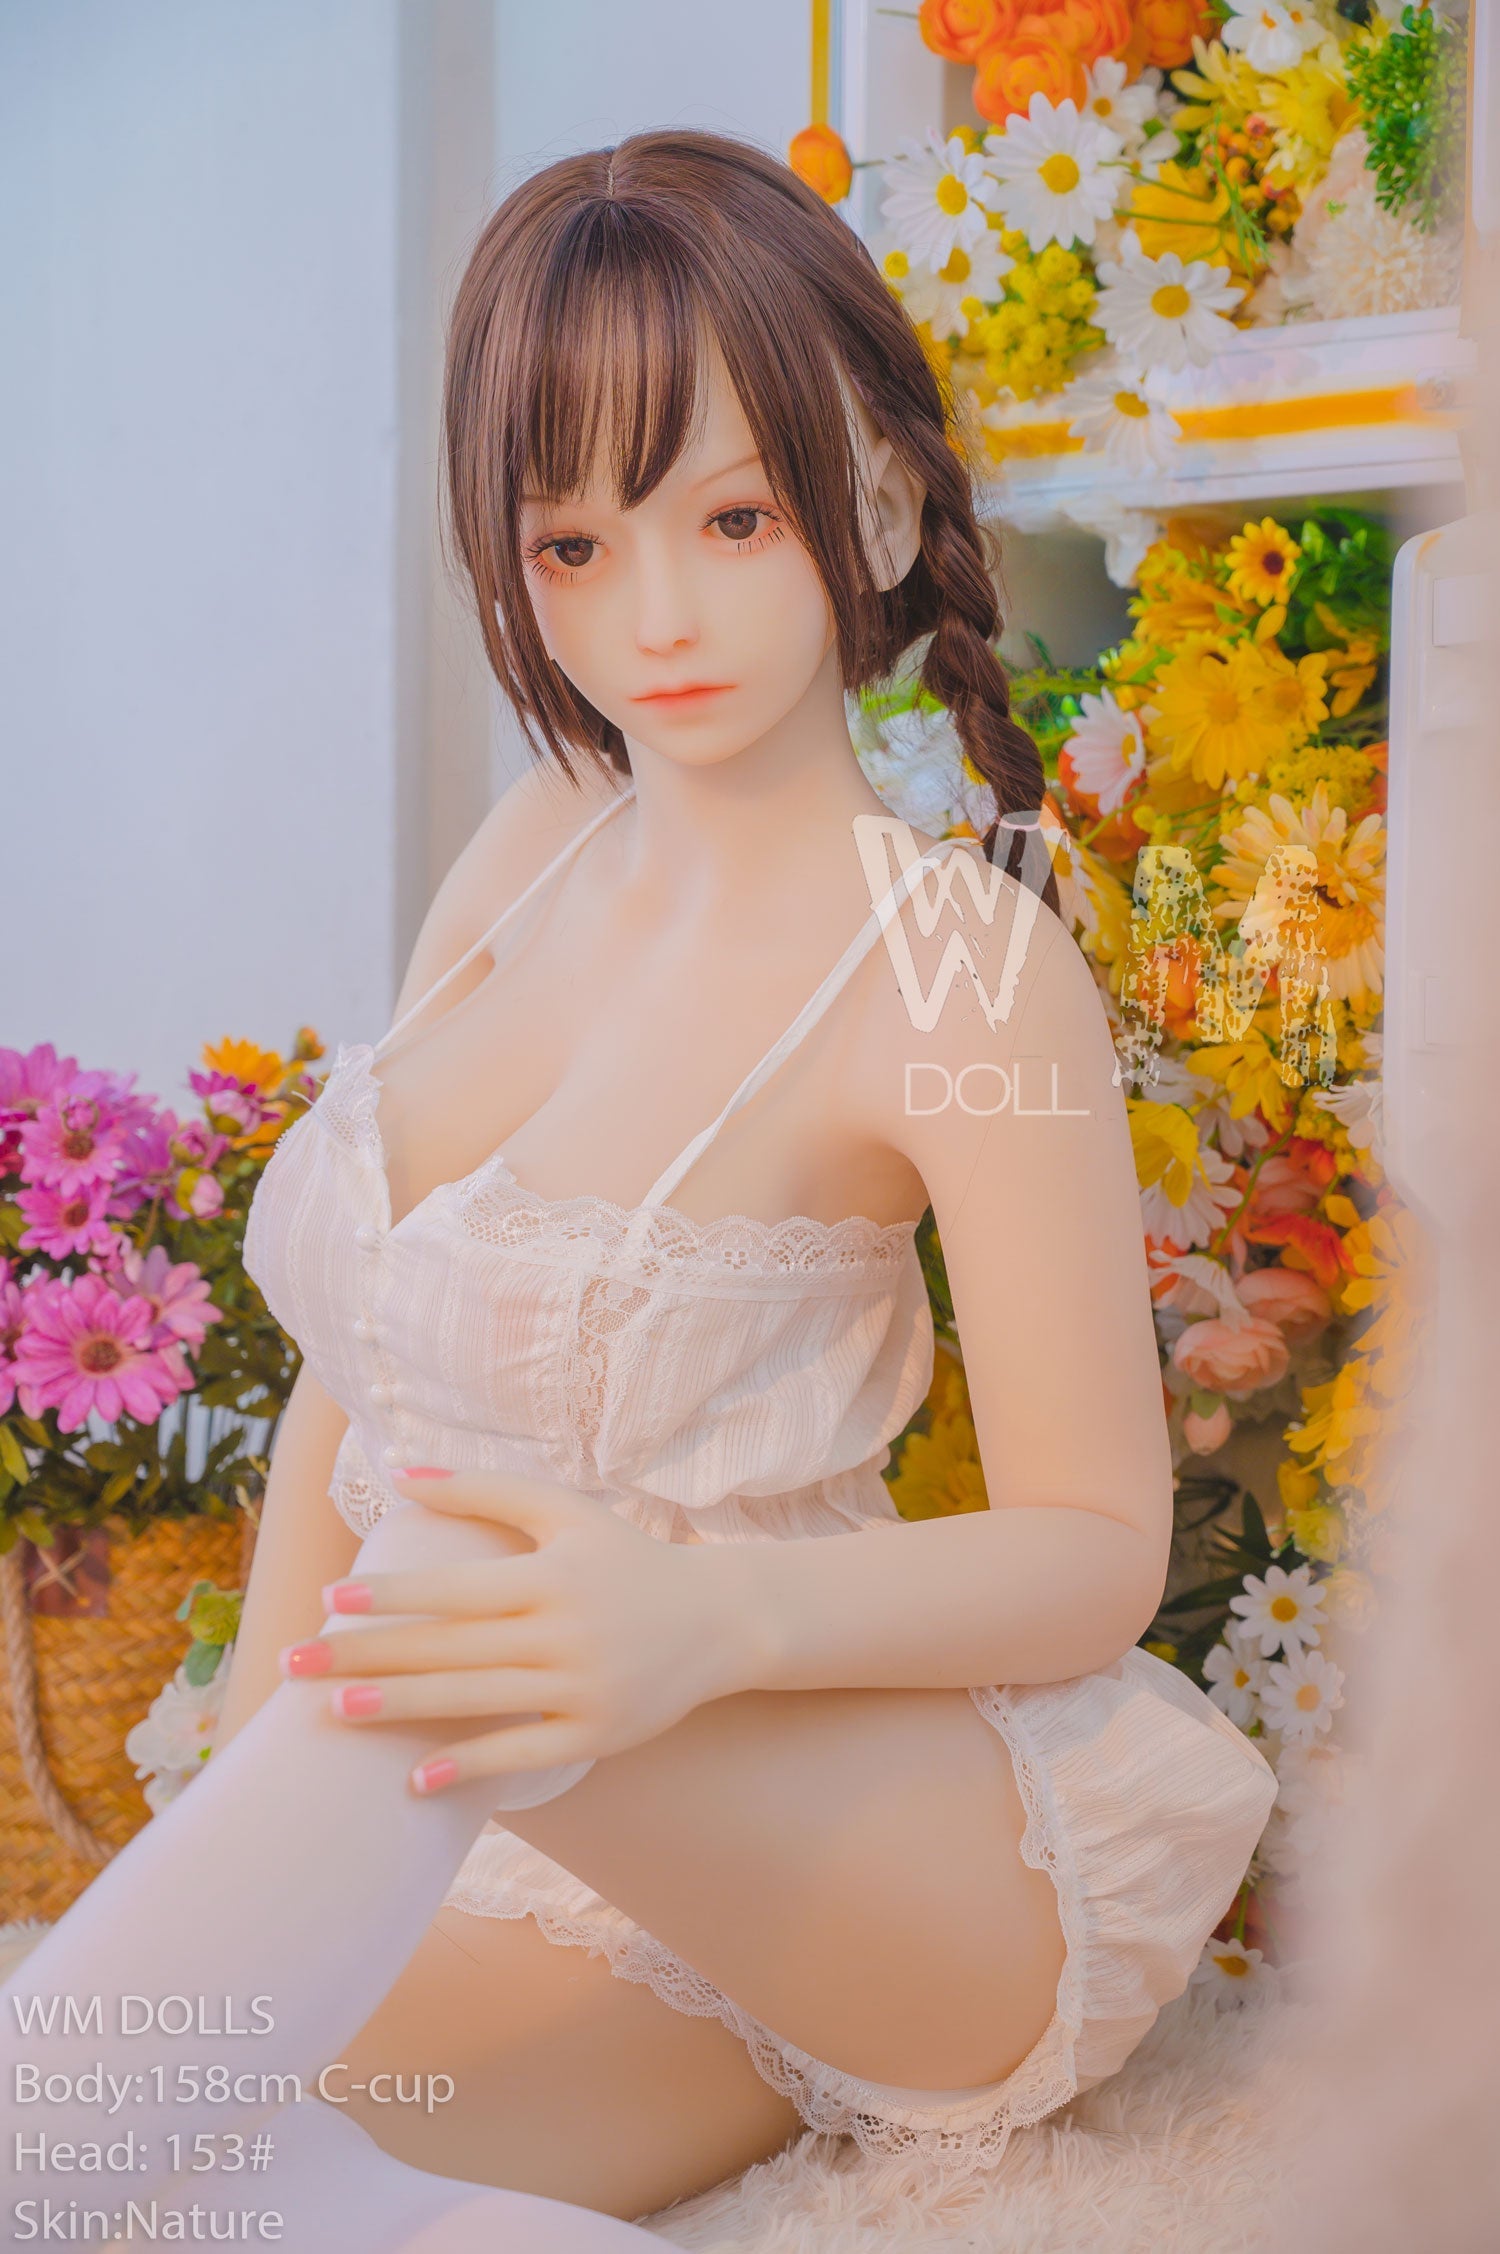 WM Doll 158 cm C TPE - Brielle | Buy Sex Dolls at DOLLS ACTUALLY